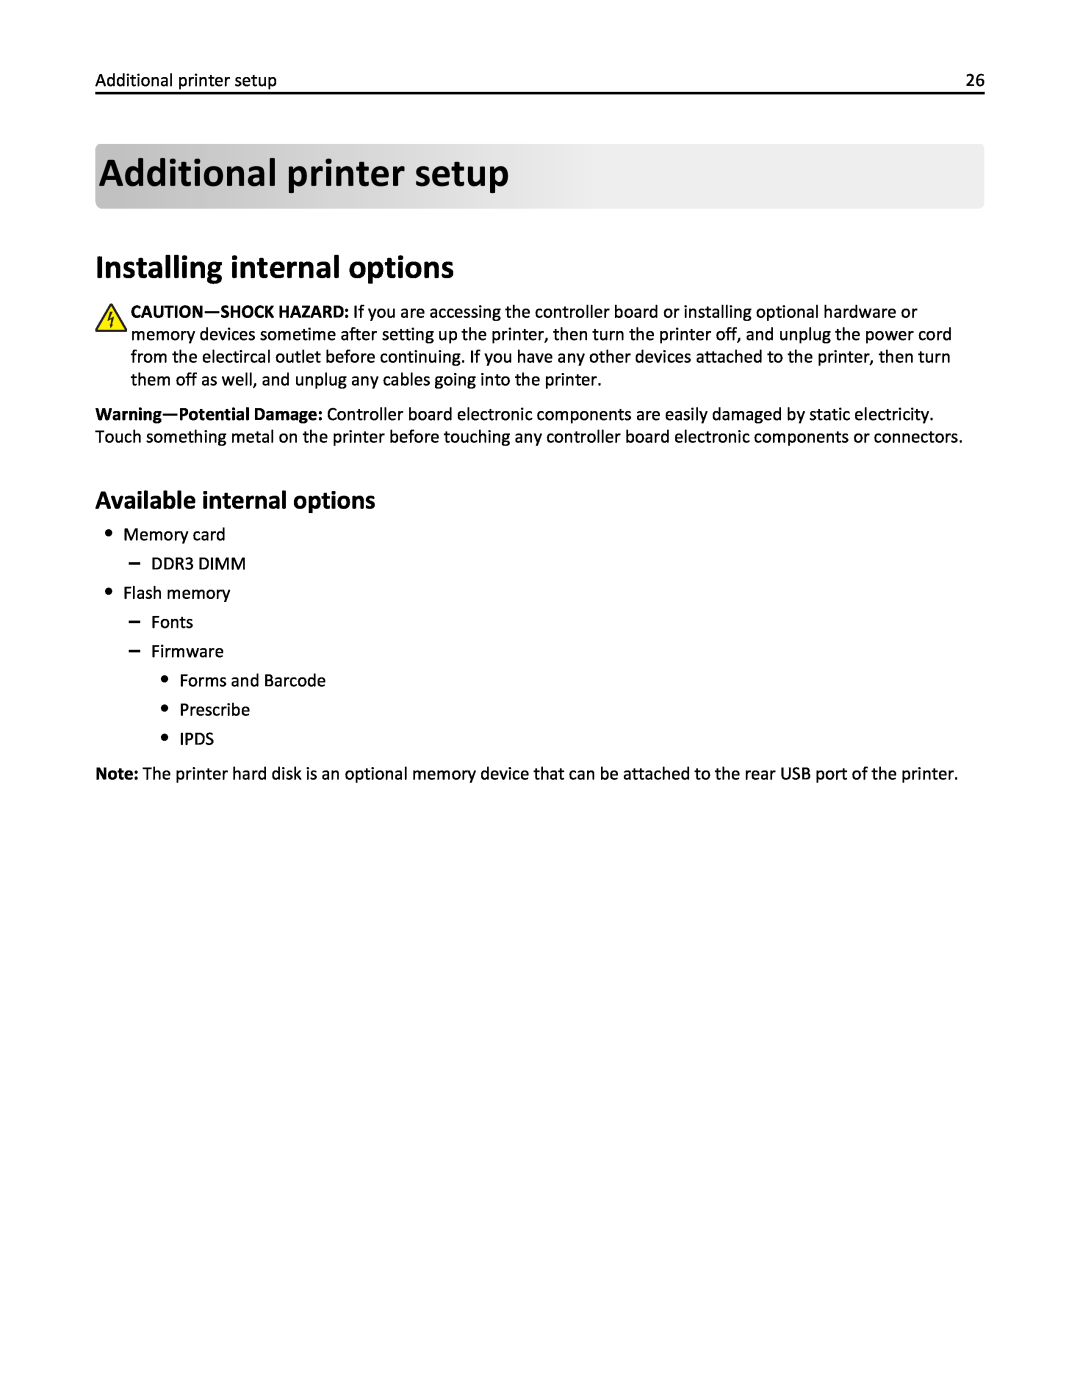 Lexmark 436 manual Additional printer setup, Installing internal options, Available internal options 